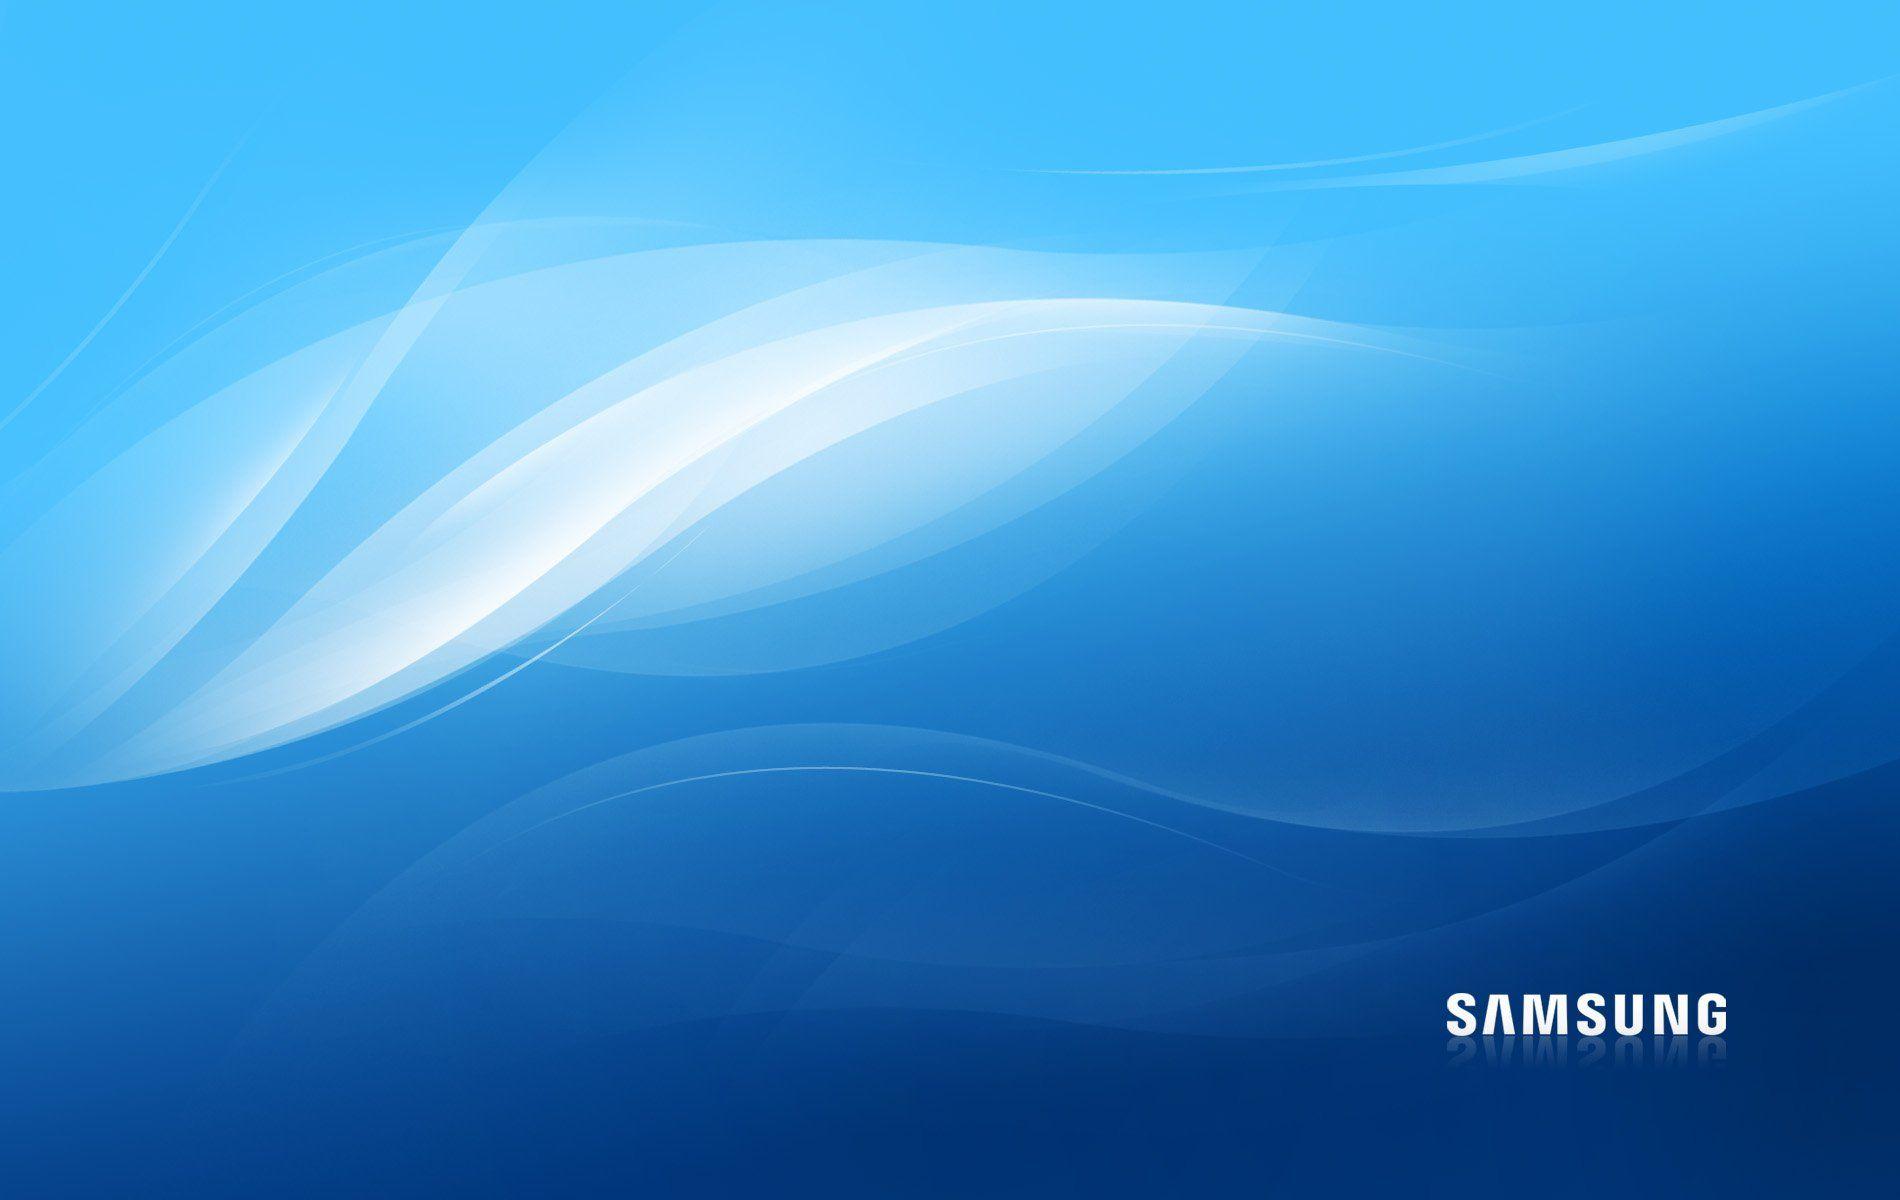 Samsung Backgrounds - Wallpaper Cave